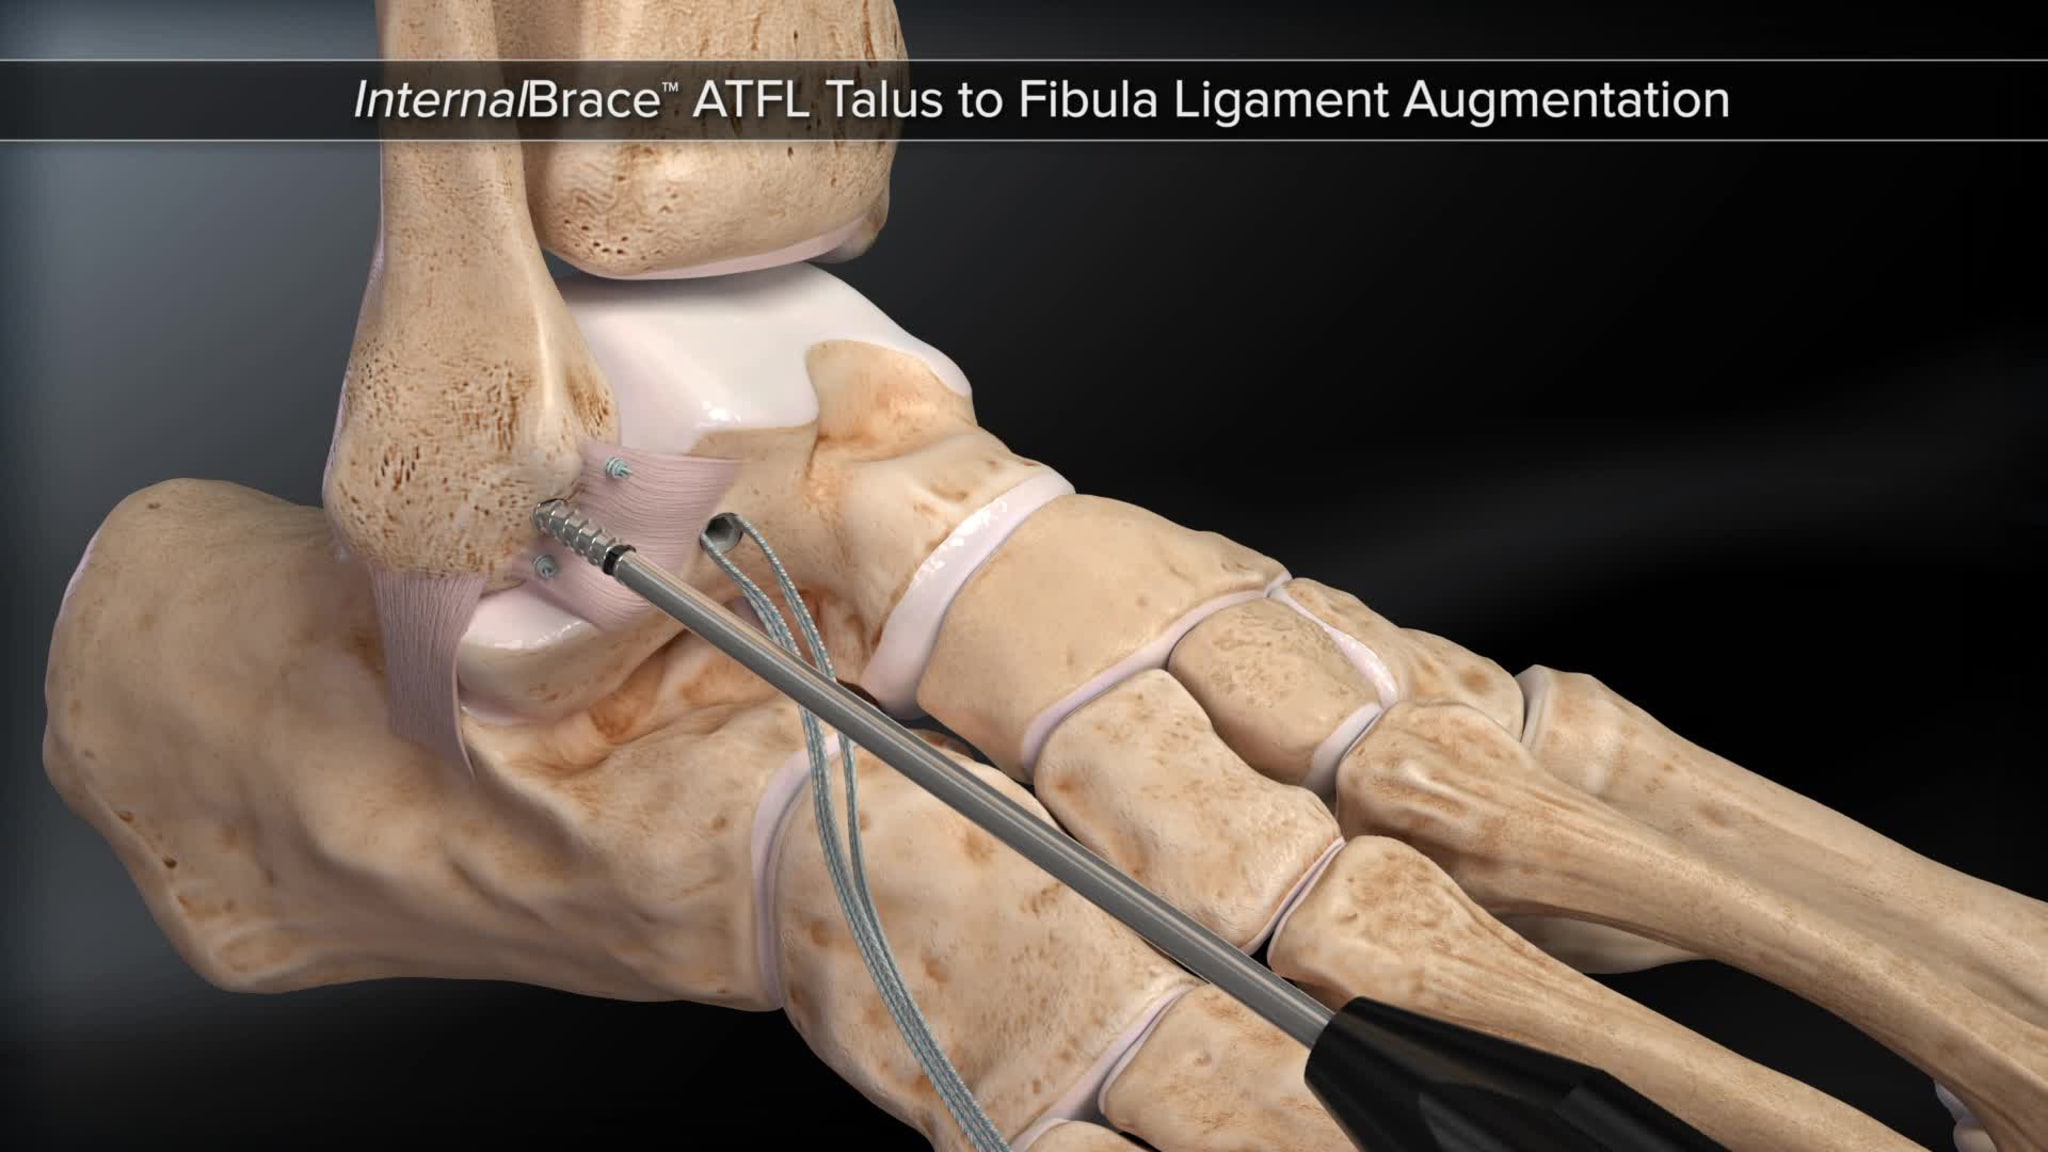 Arthrex - InternalBrace™ Ligament Augmentation Repair—Deltoid Ligament